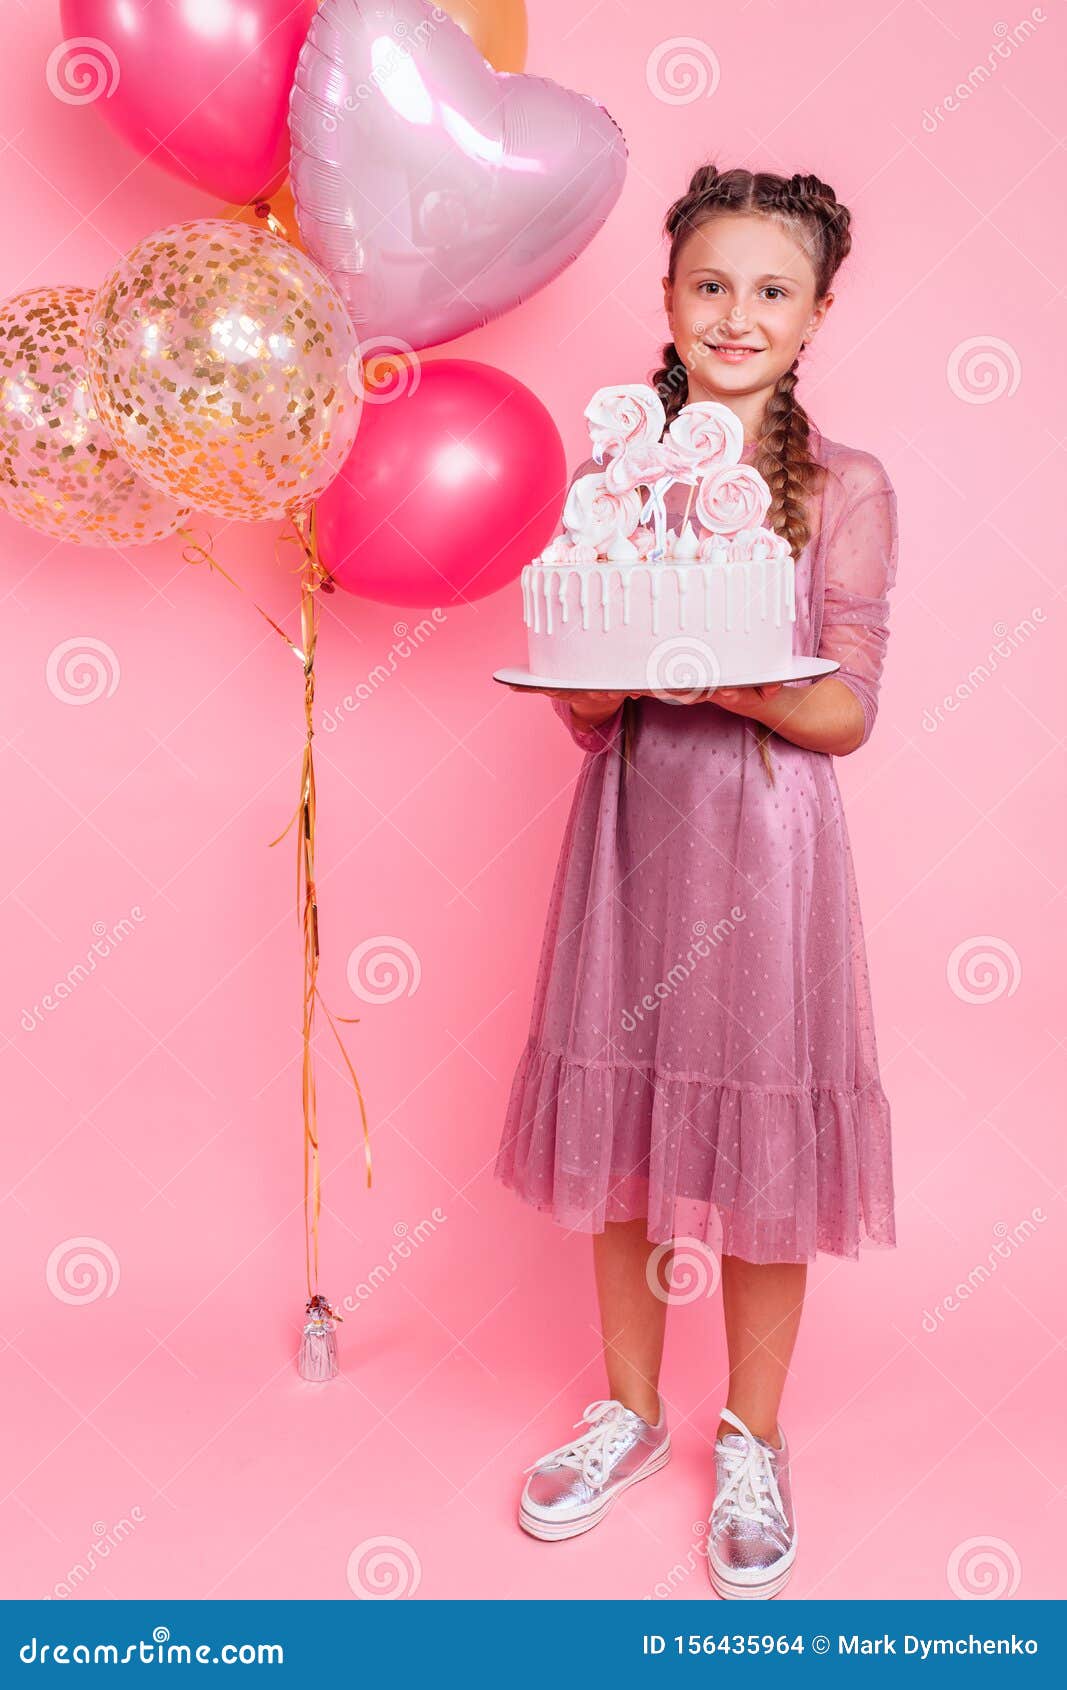 Birthday Balloon Girls 16+ on X: 